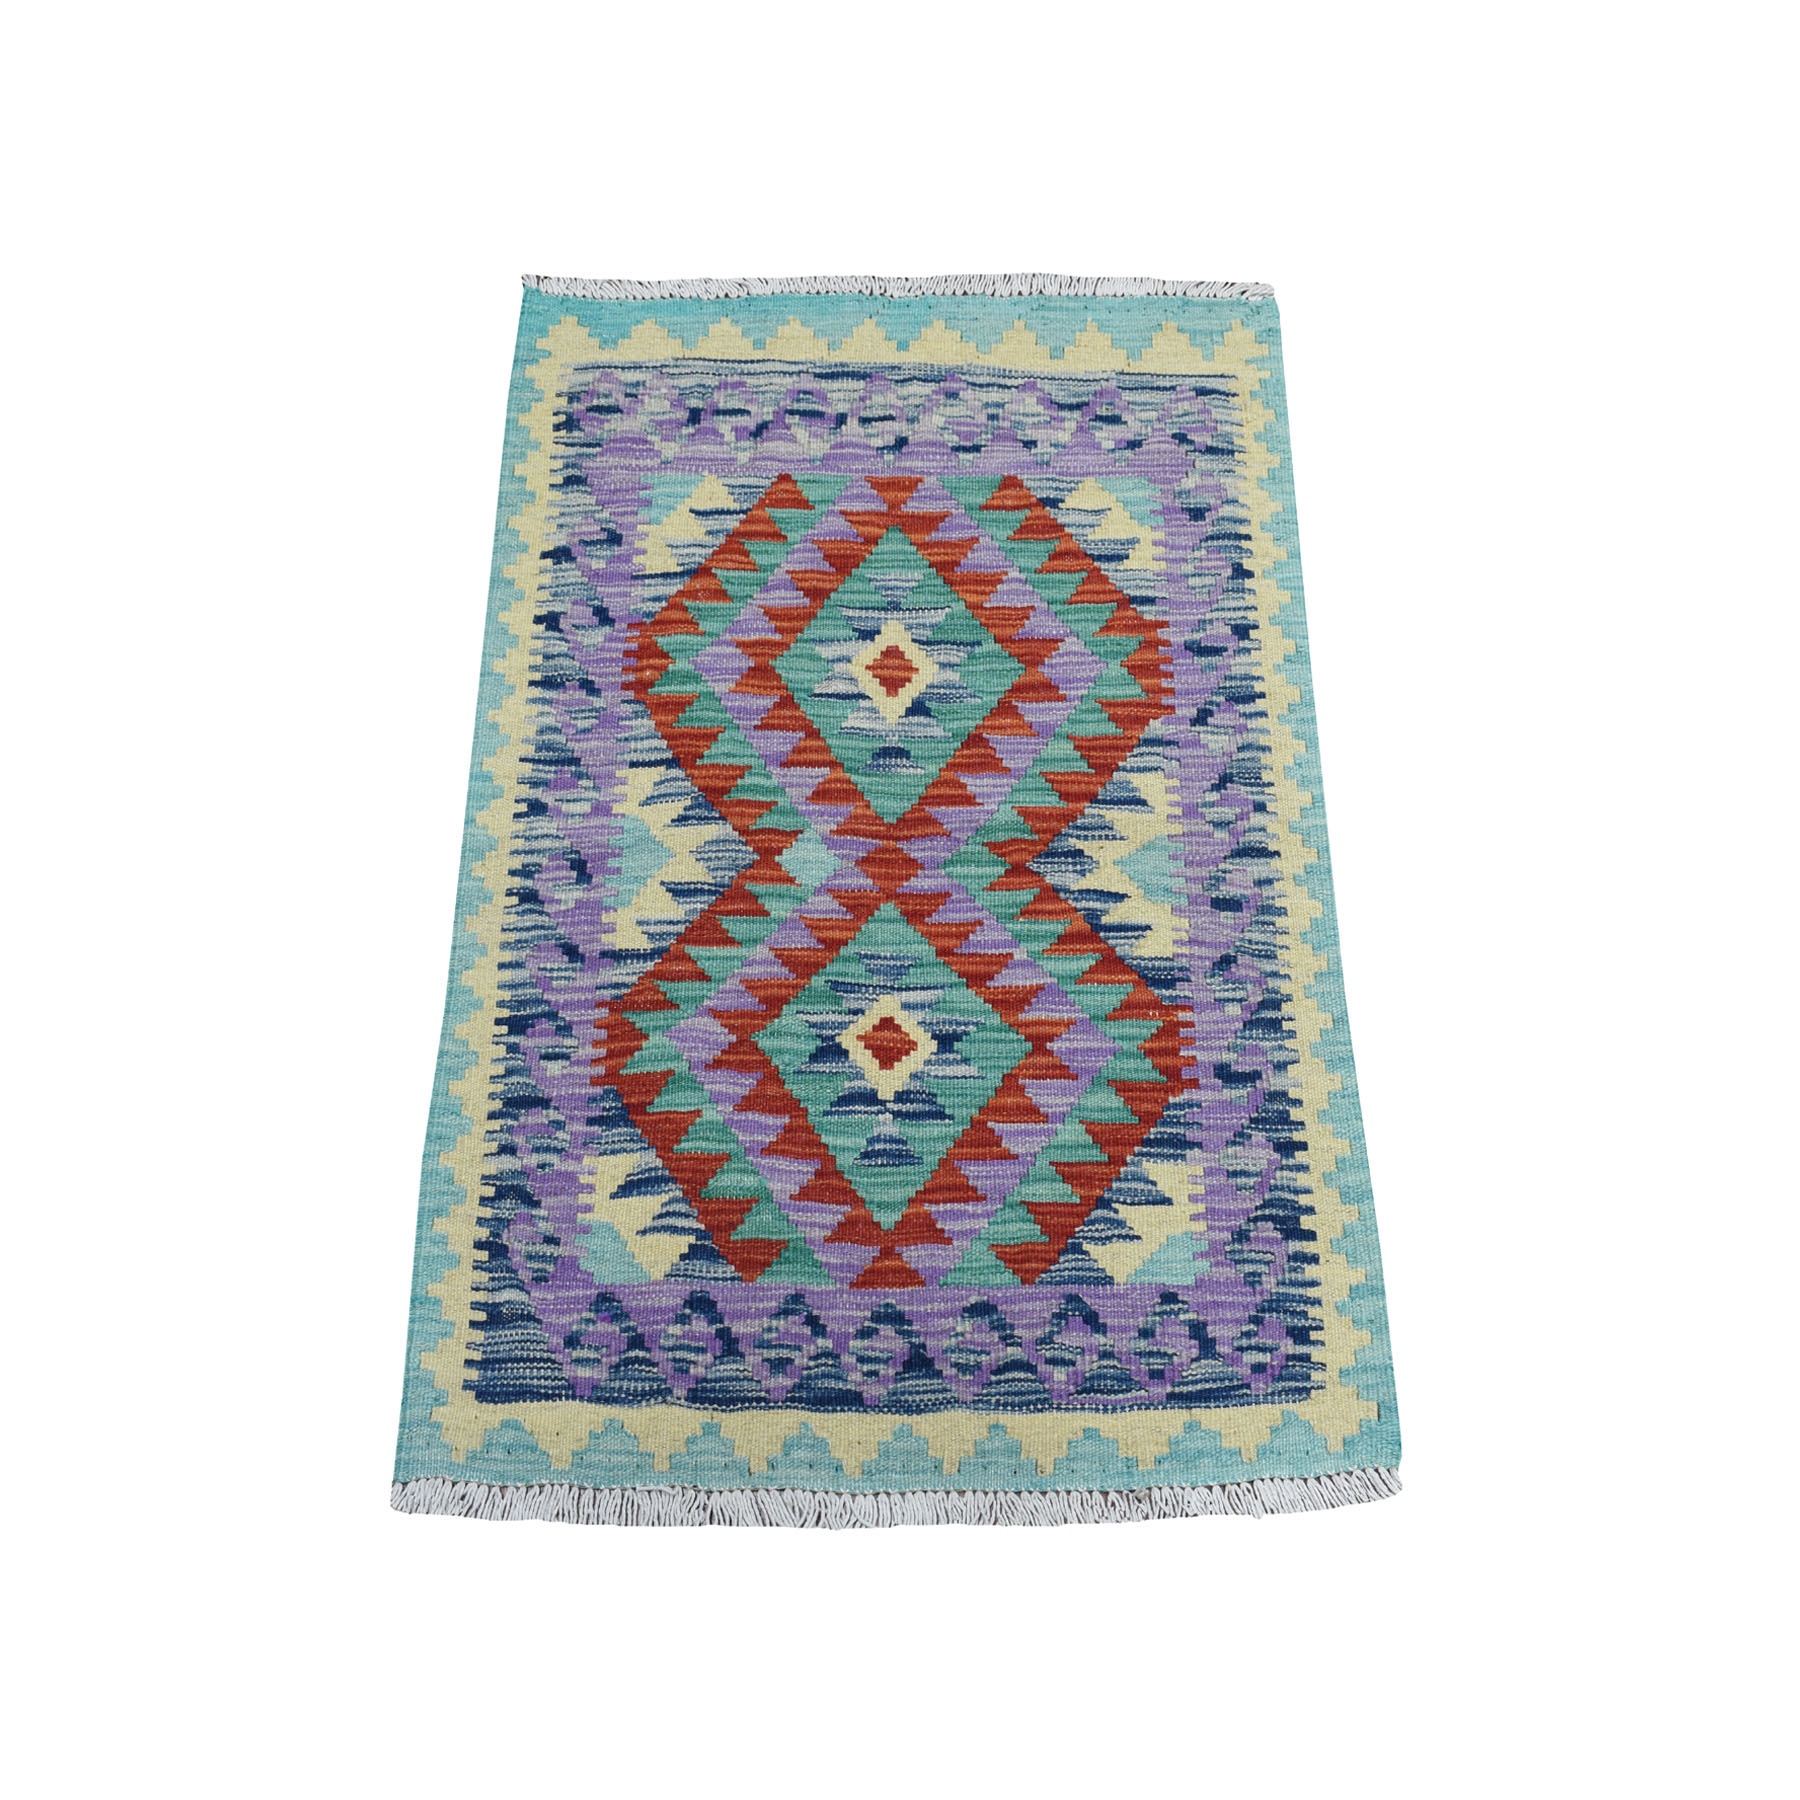 2'2"x3' Colorful Afghan Kilim Pure Wool Hand Woven Oriental Rug 